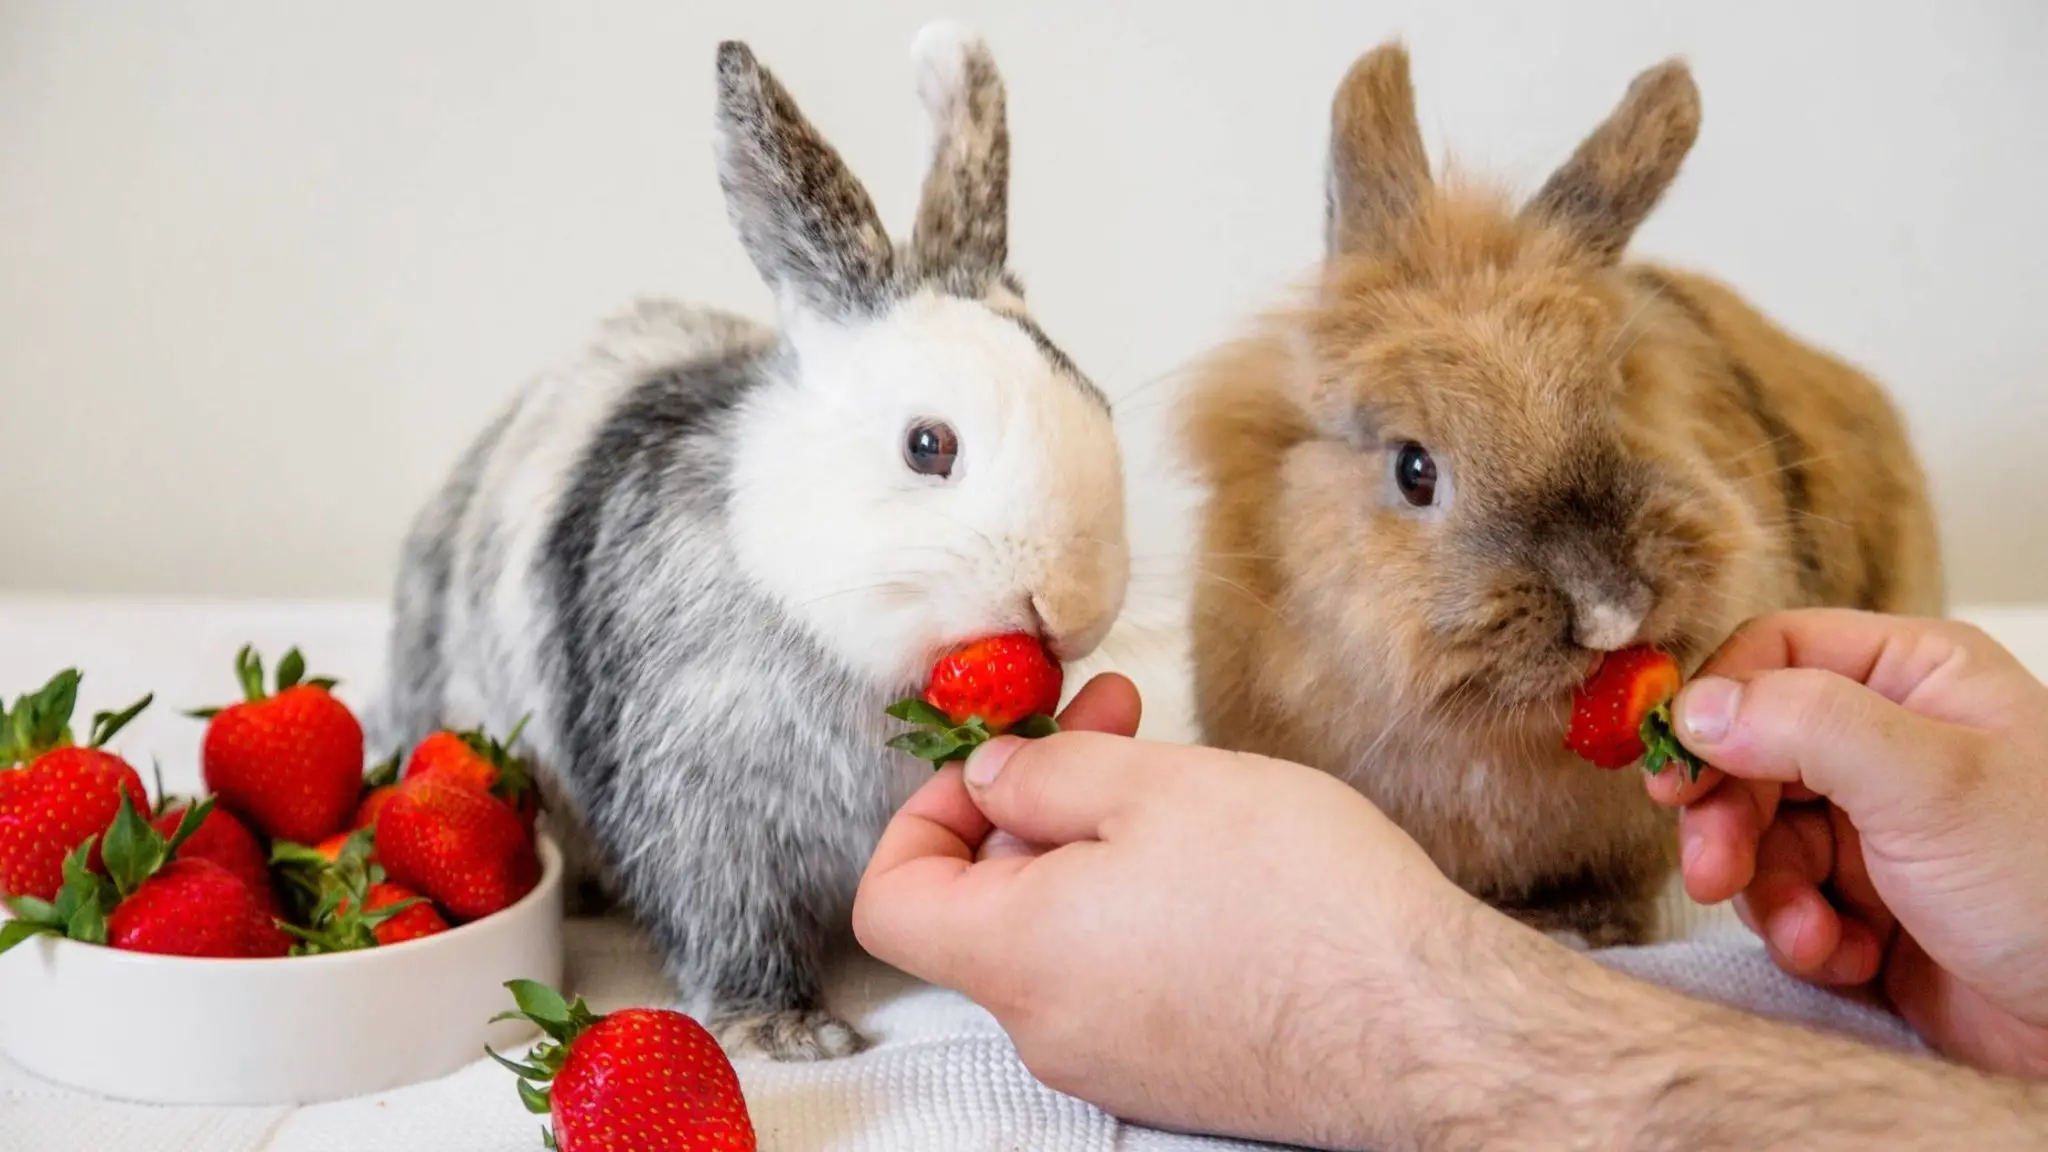 can rabbit eat strawberry